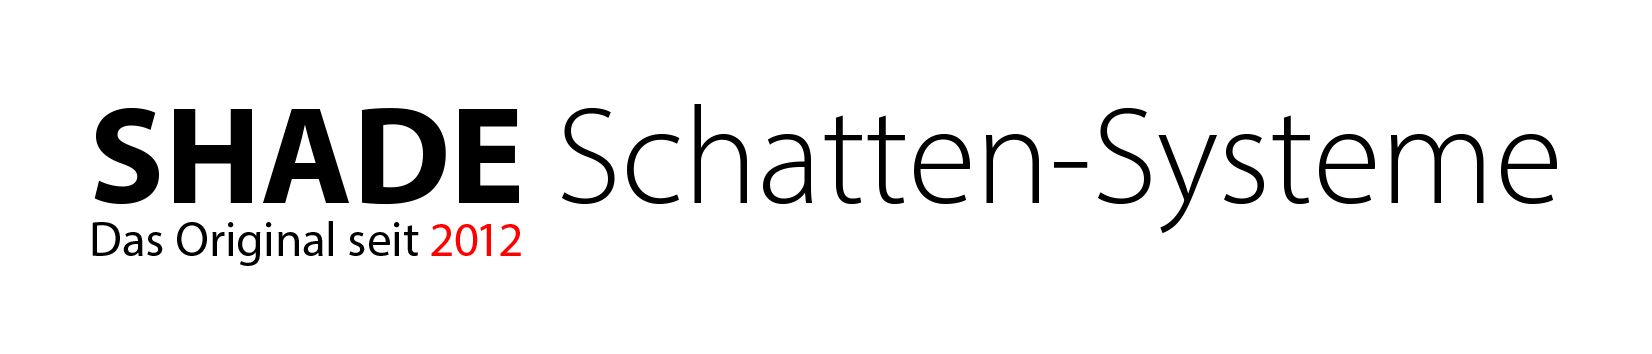 shadesign-partner-logo